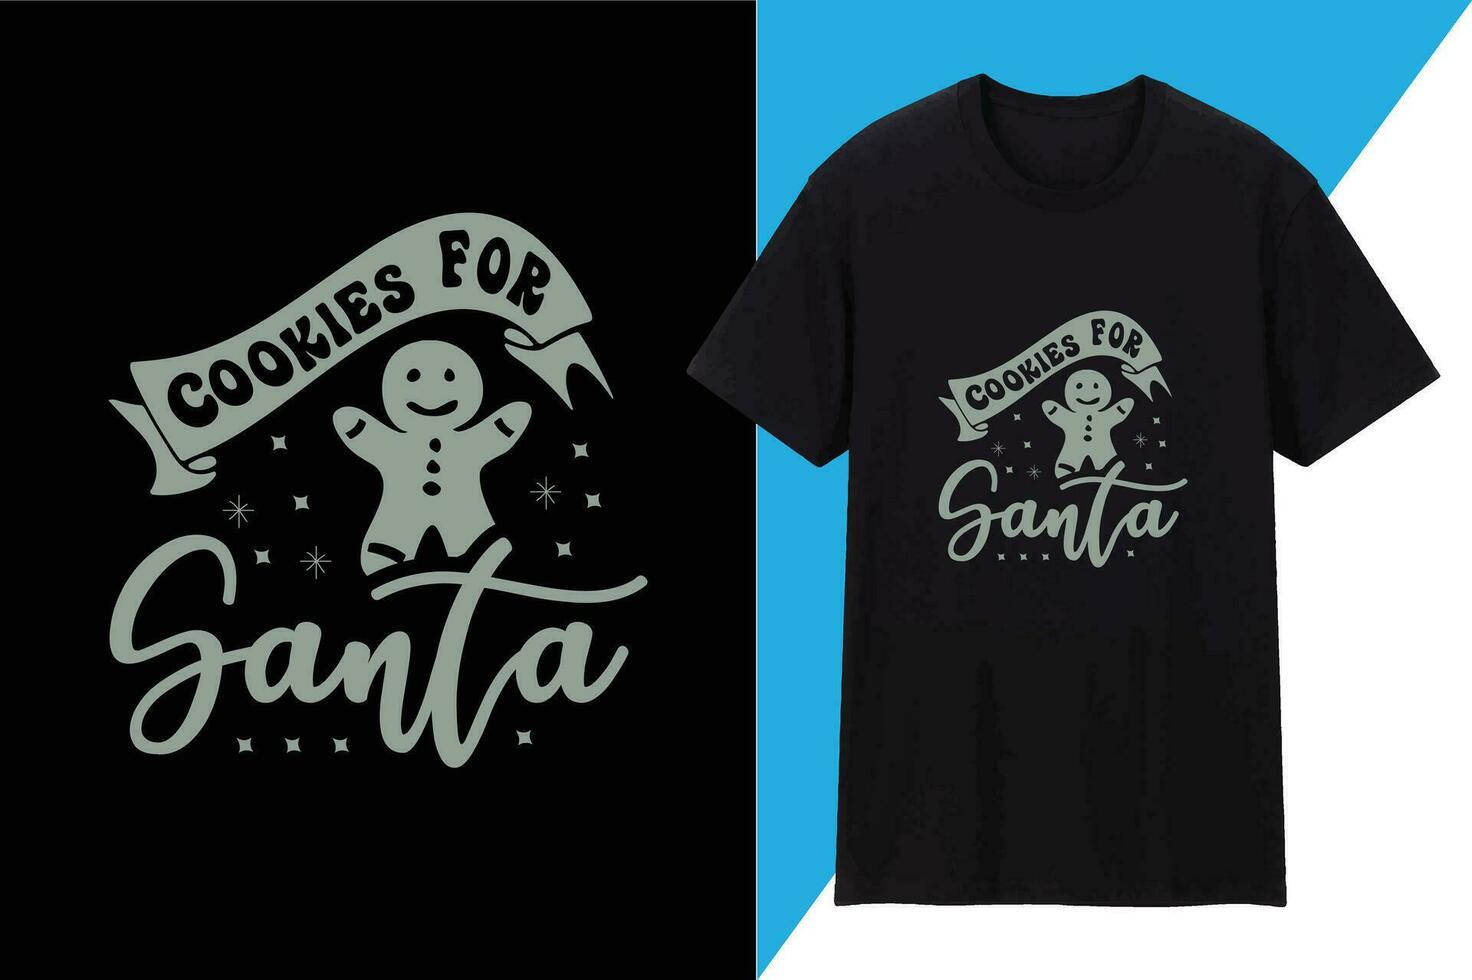 Cookies for Santa T shirt Design vector